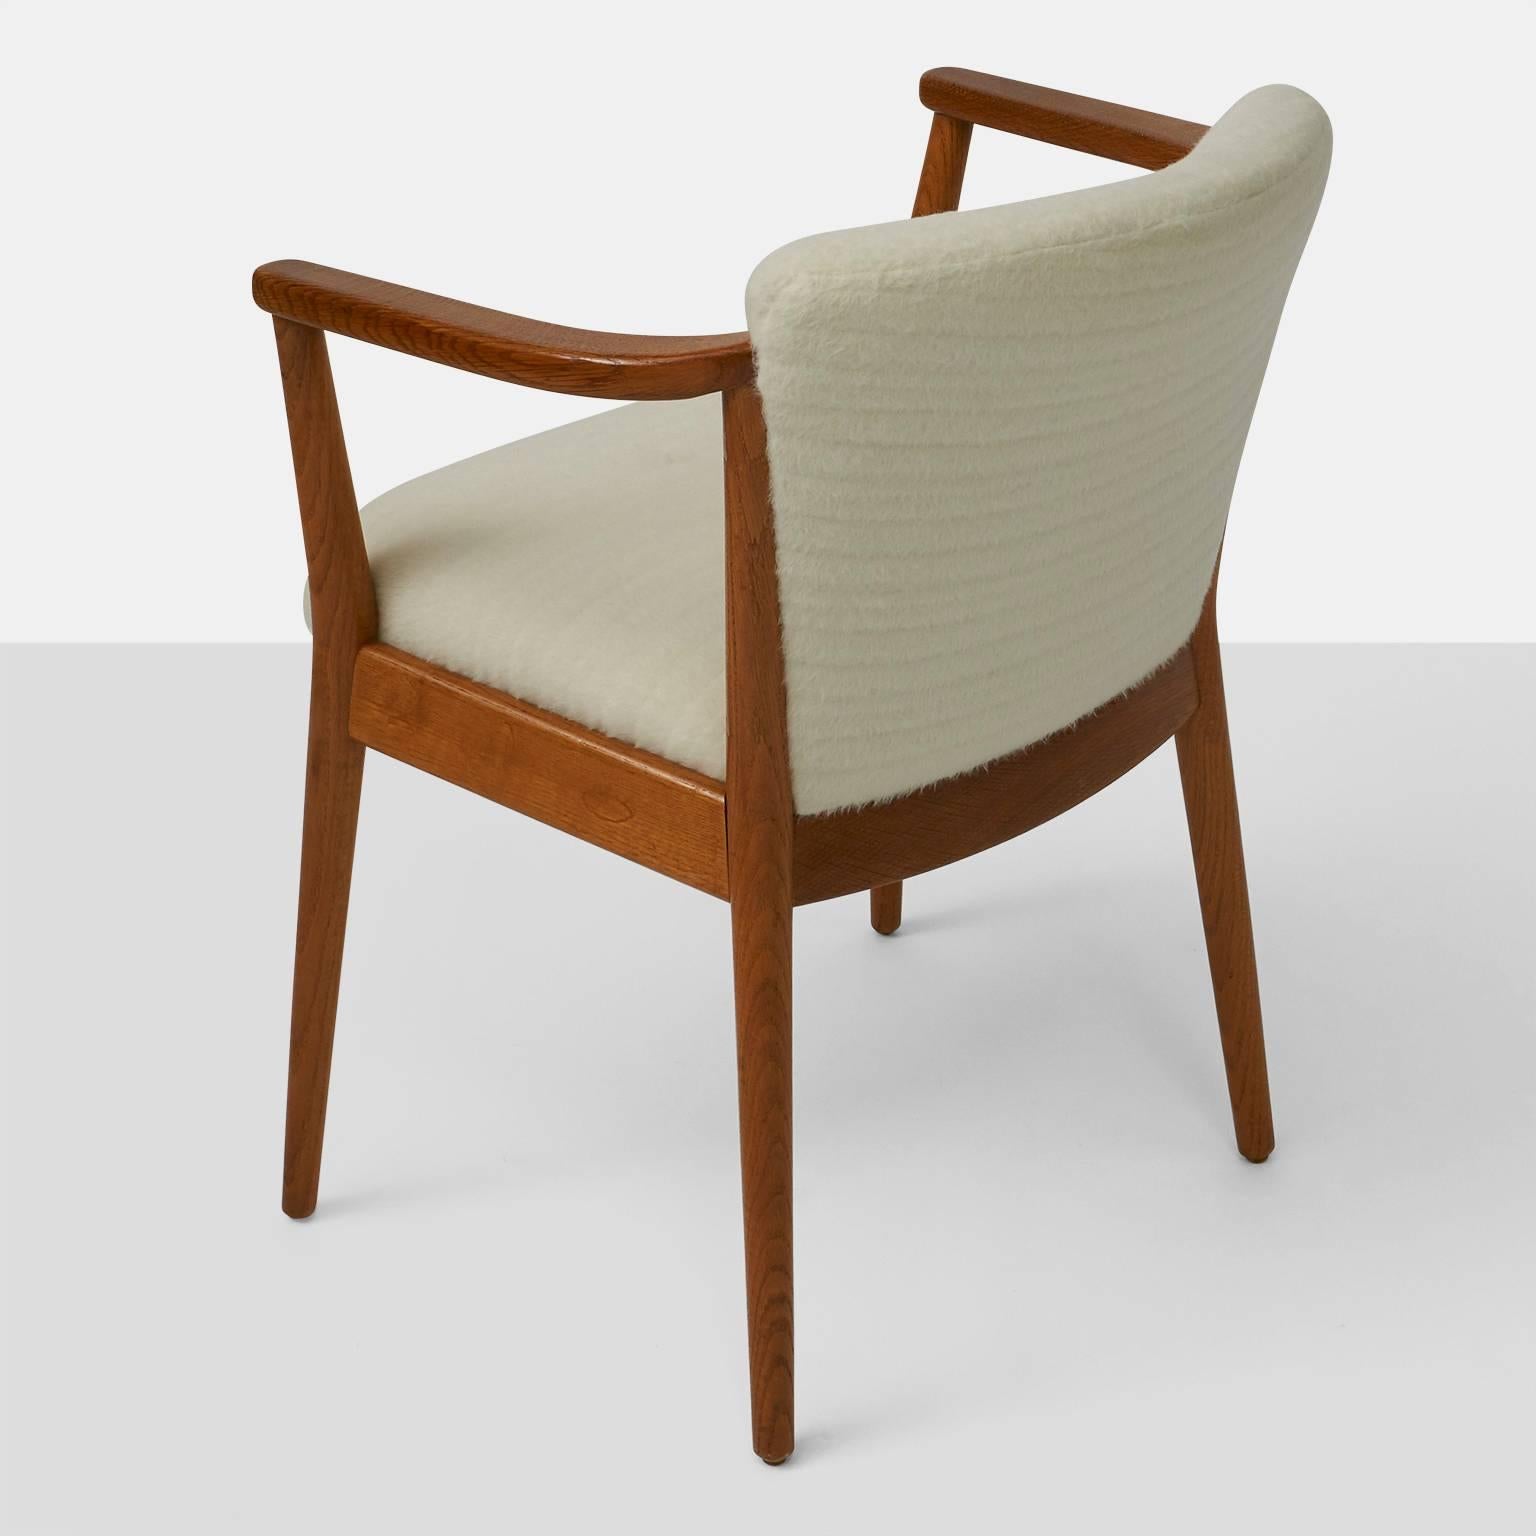 Mid-20th Century Arm Chair #83A by Nanna Ditzel